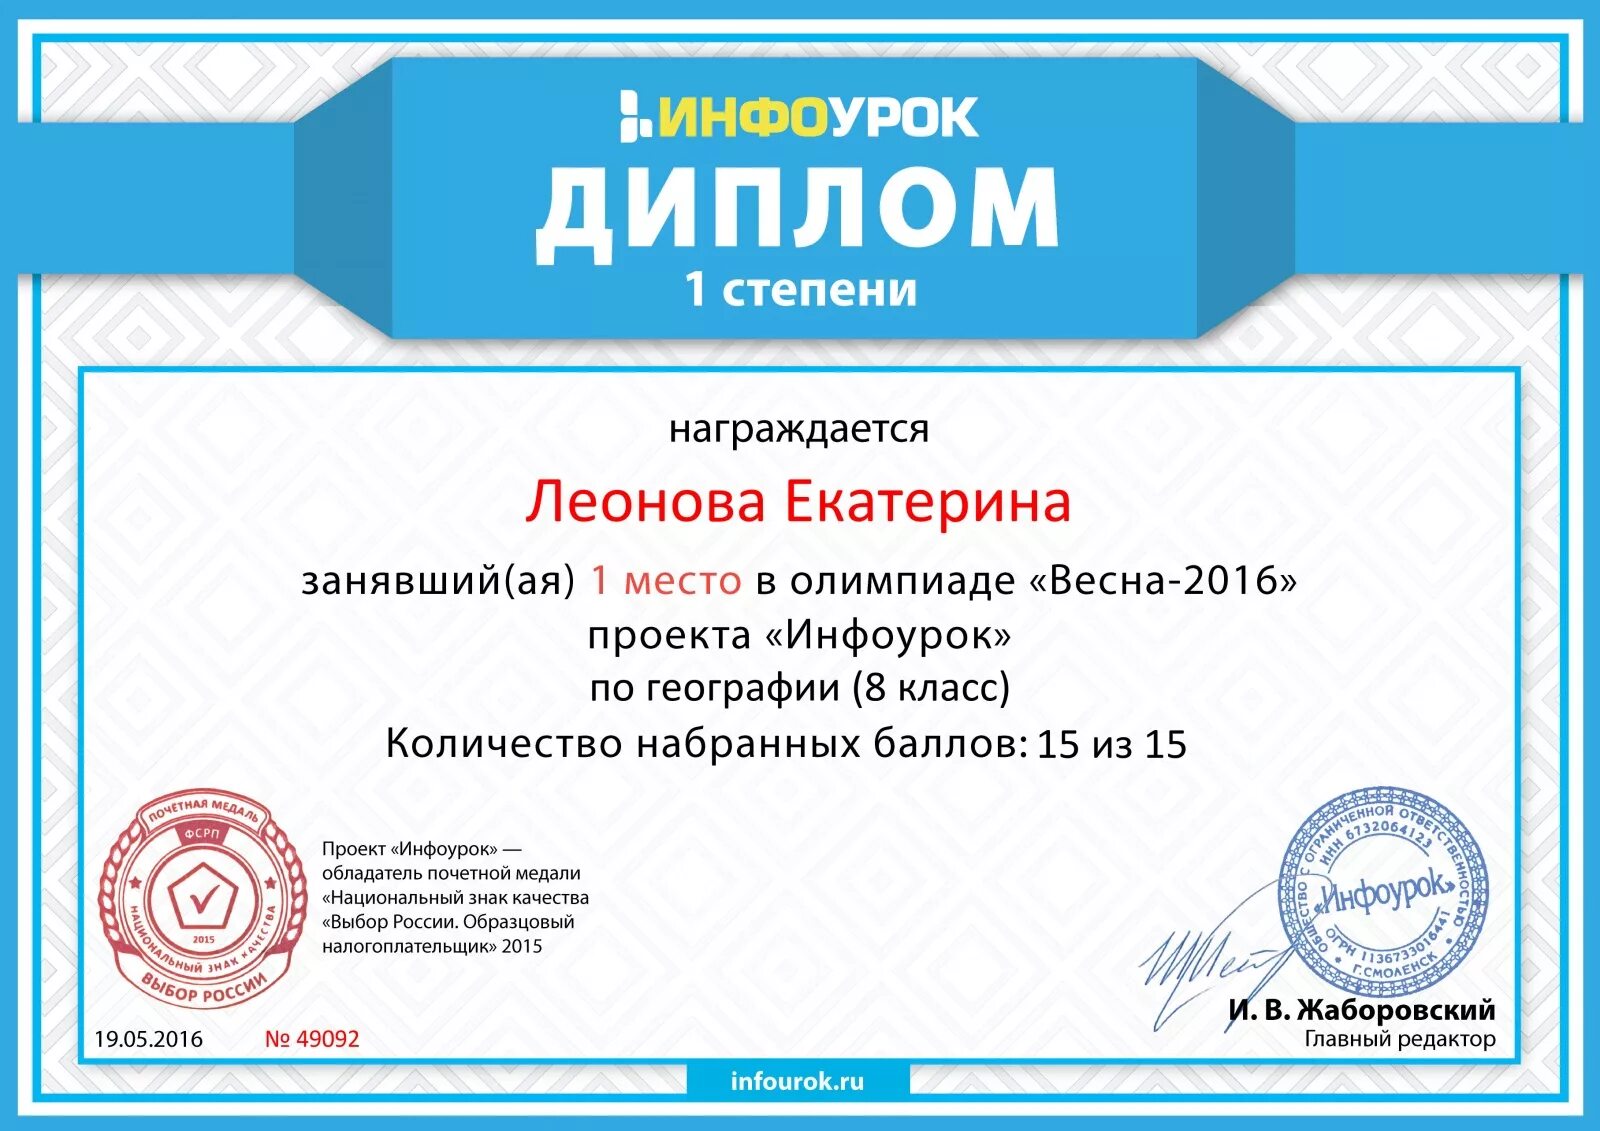 1 infourok ru. Грамота Инфоурок. Грамота сертификат.